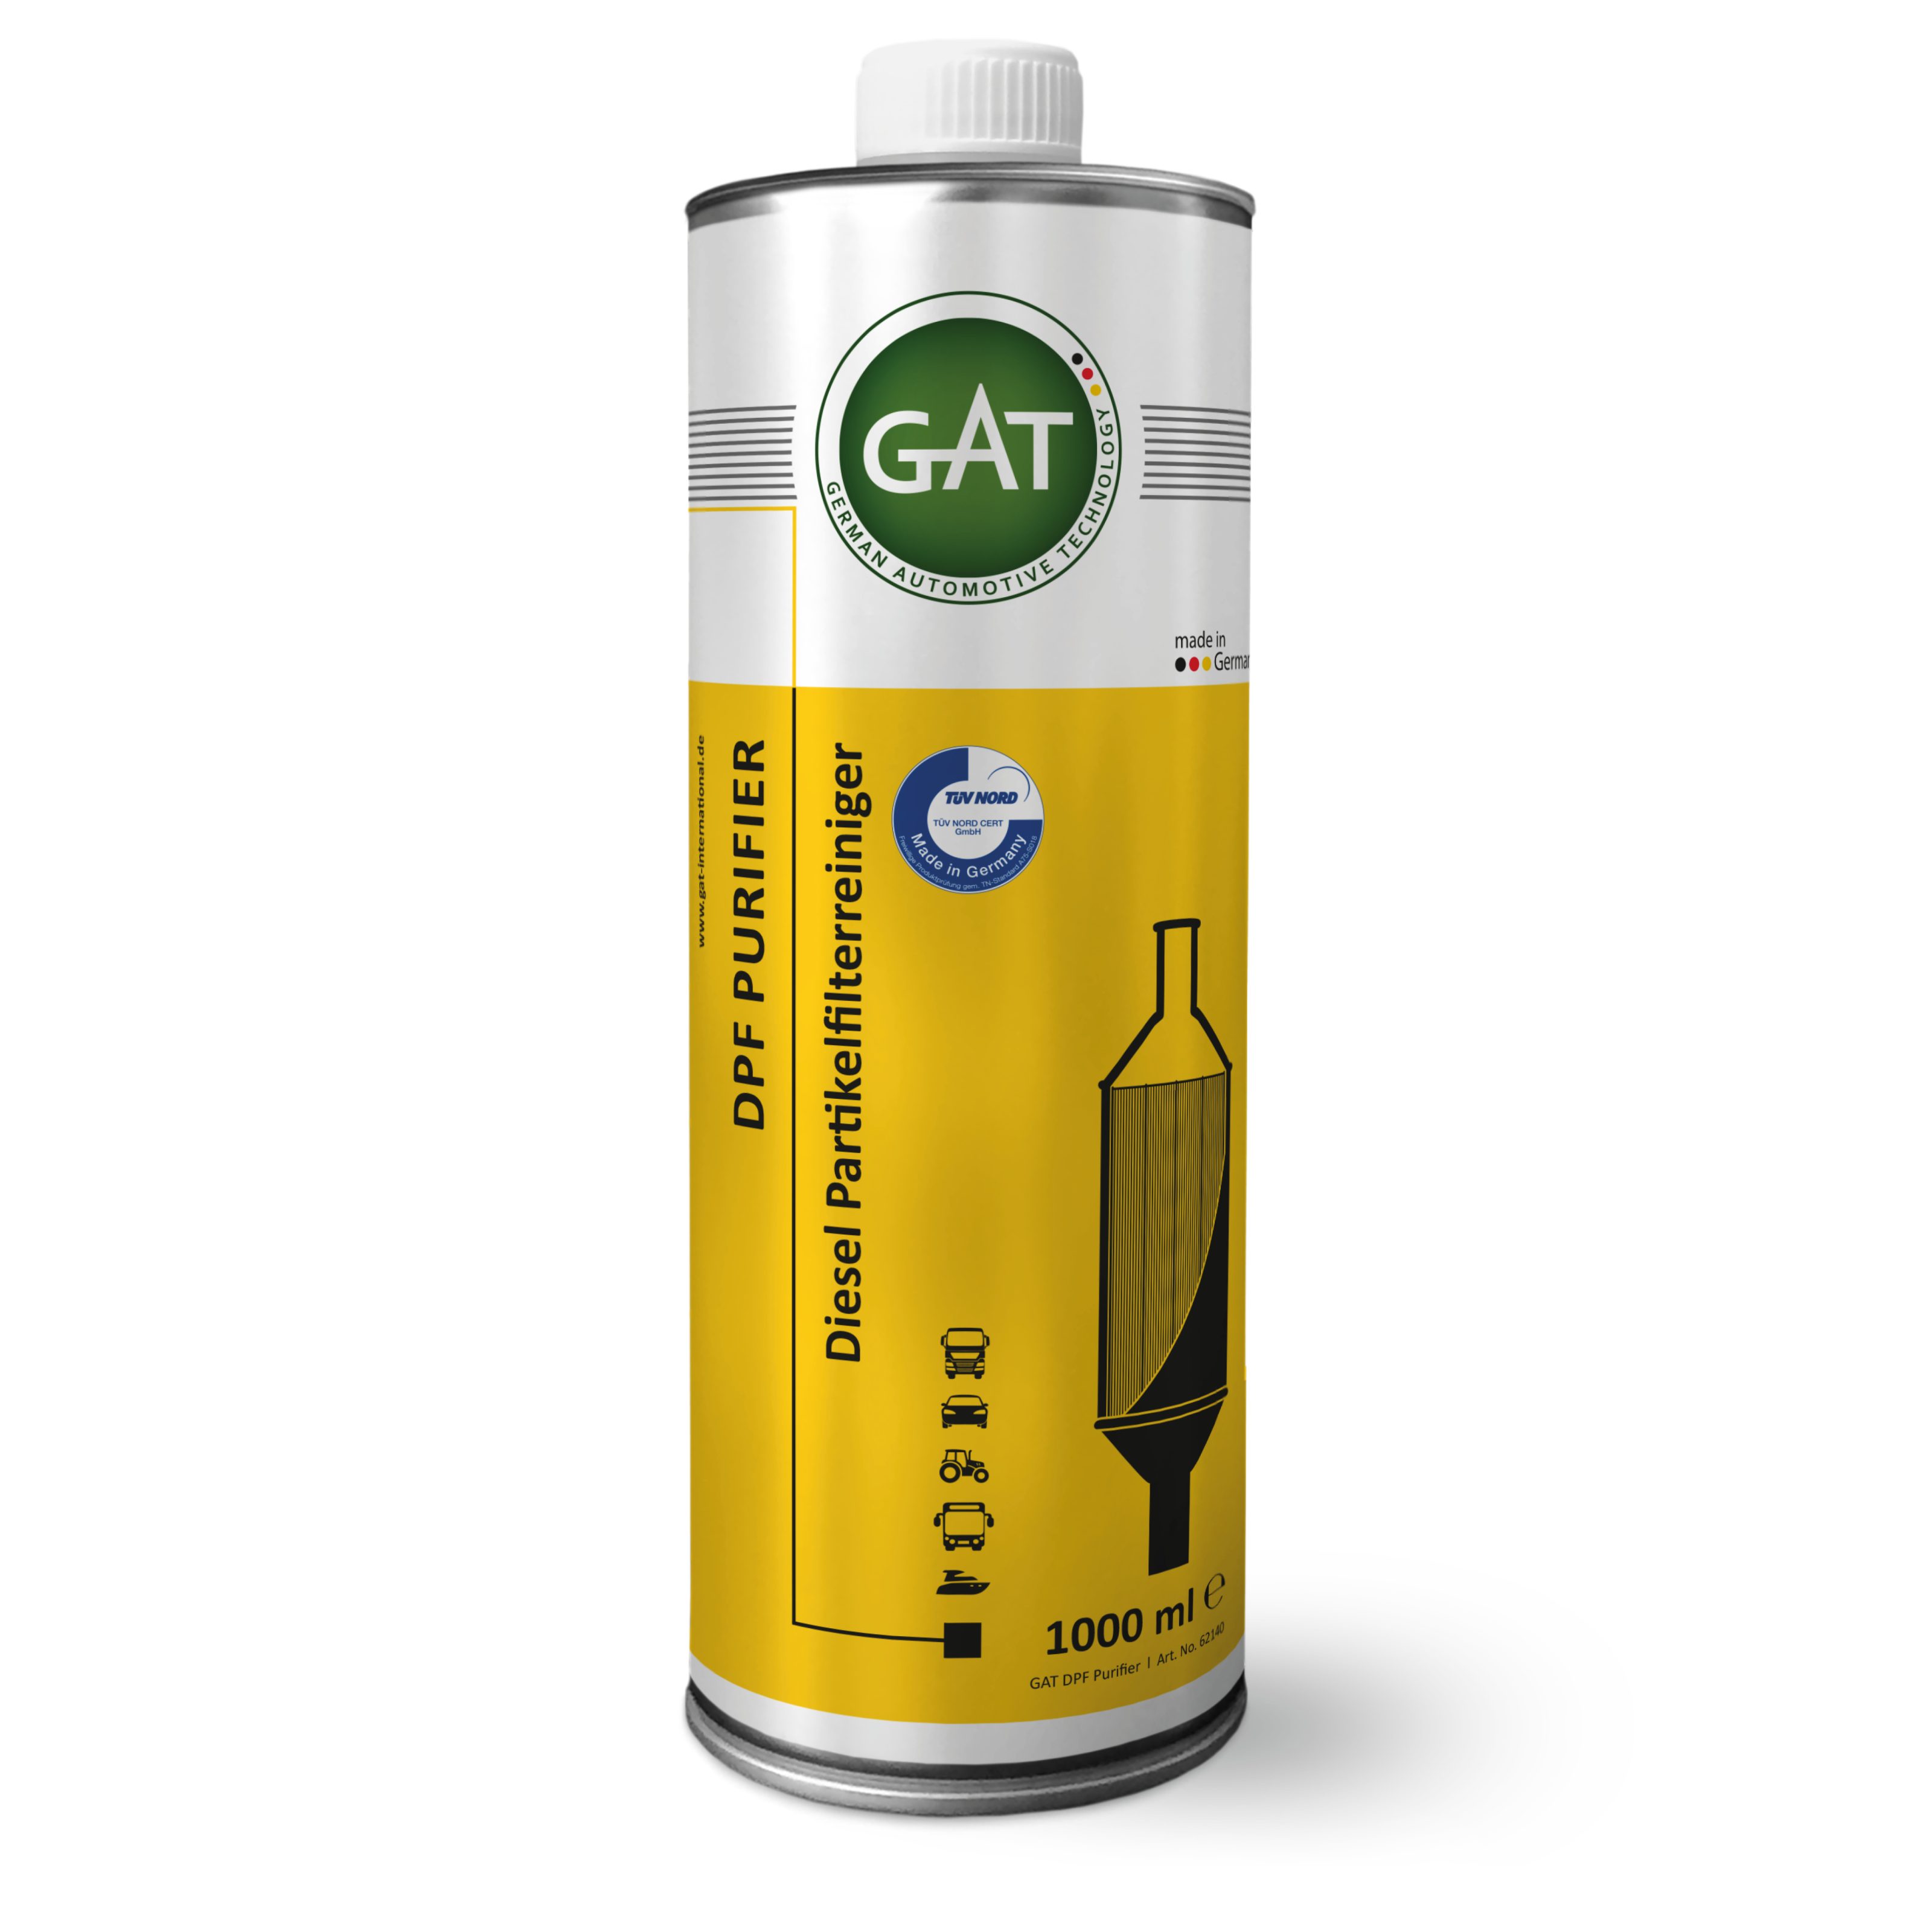 GAT DieselSystem Cleaner PLUS - Car Line